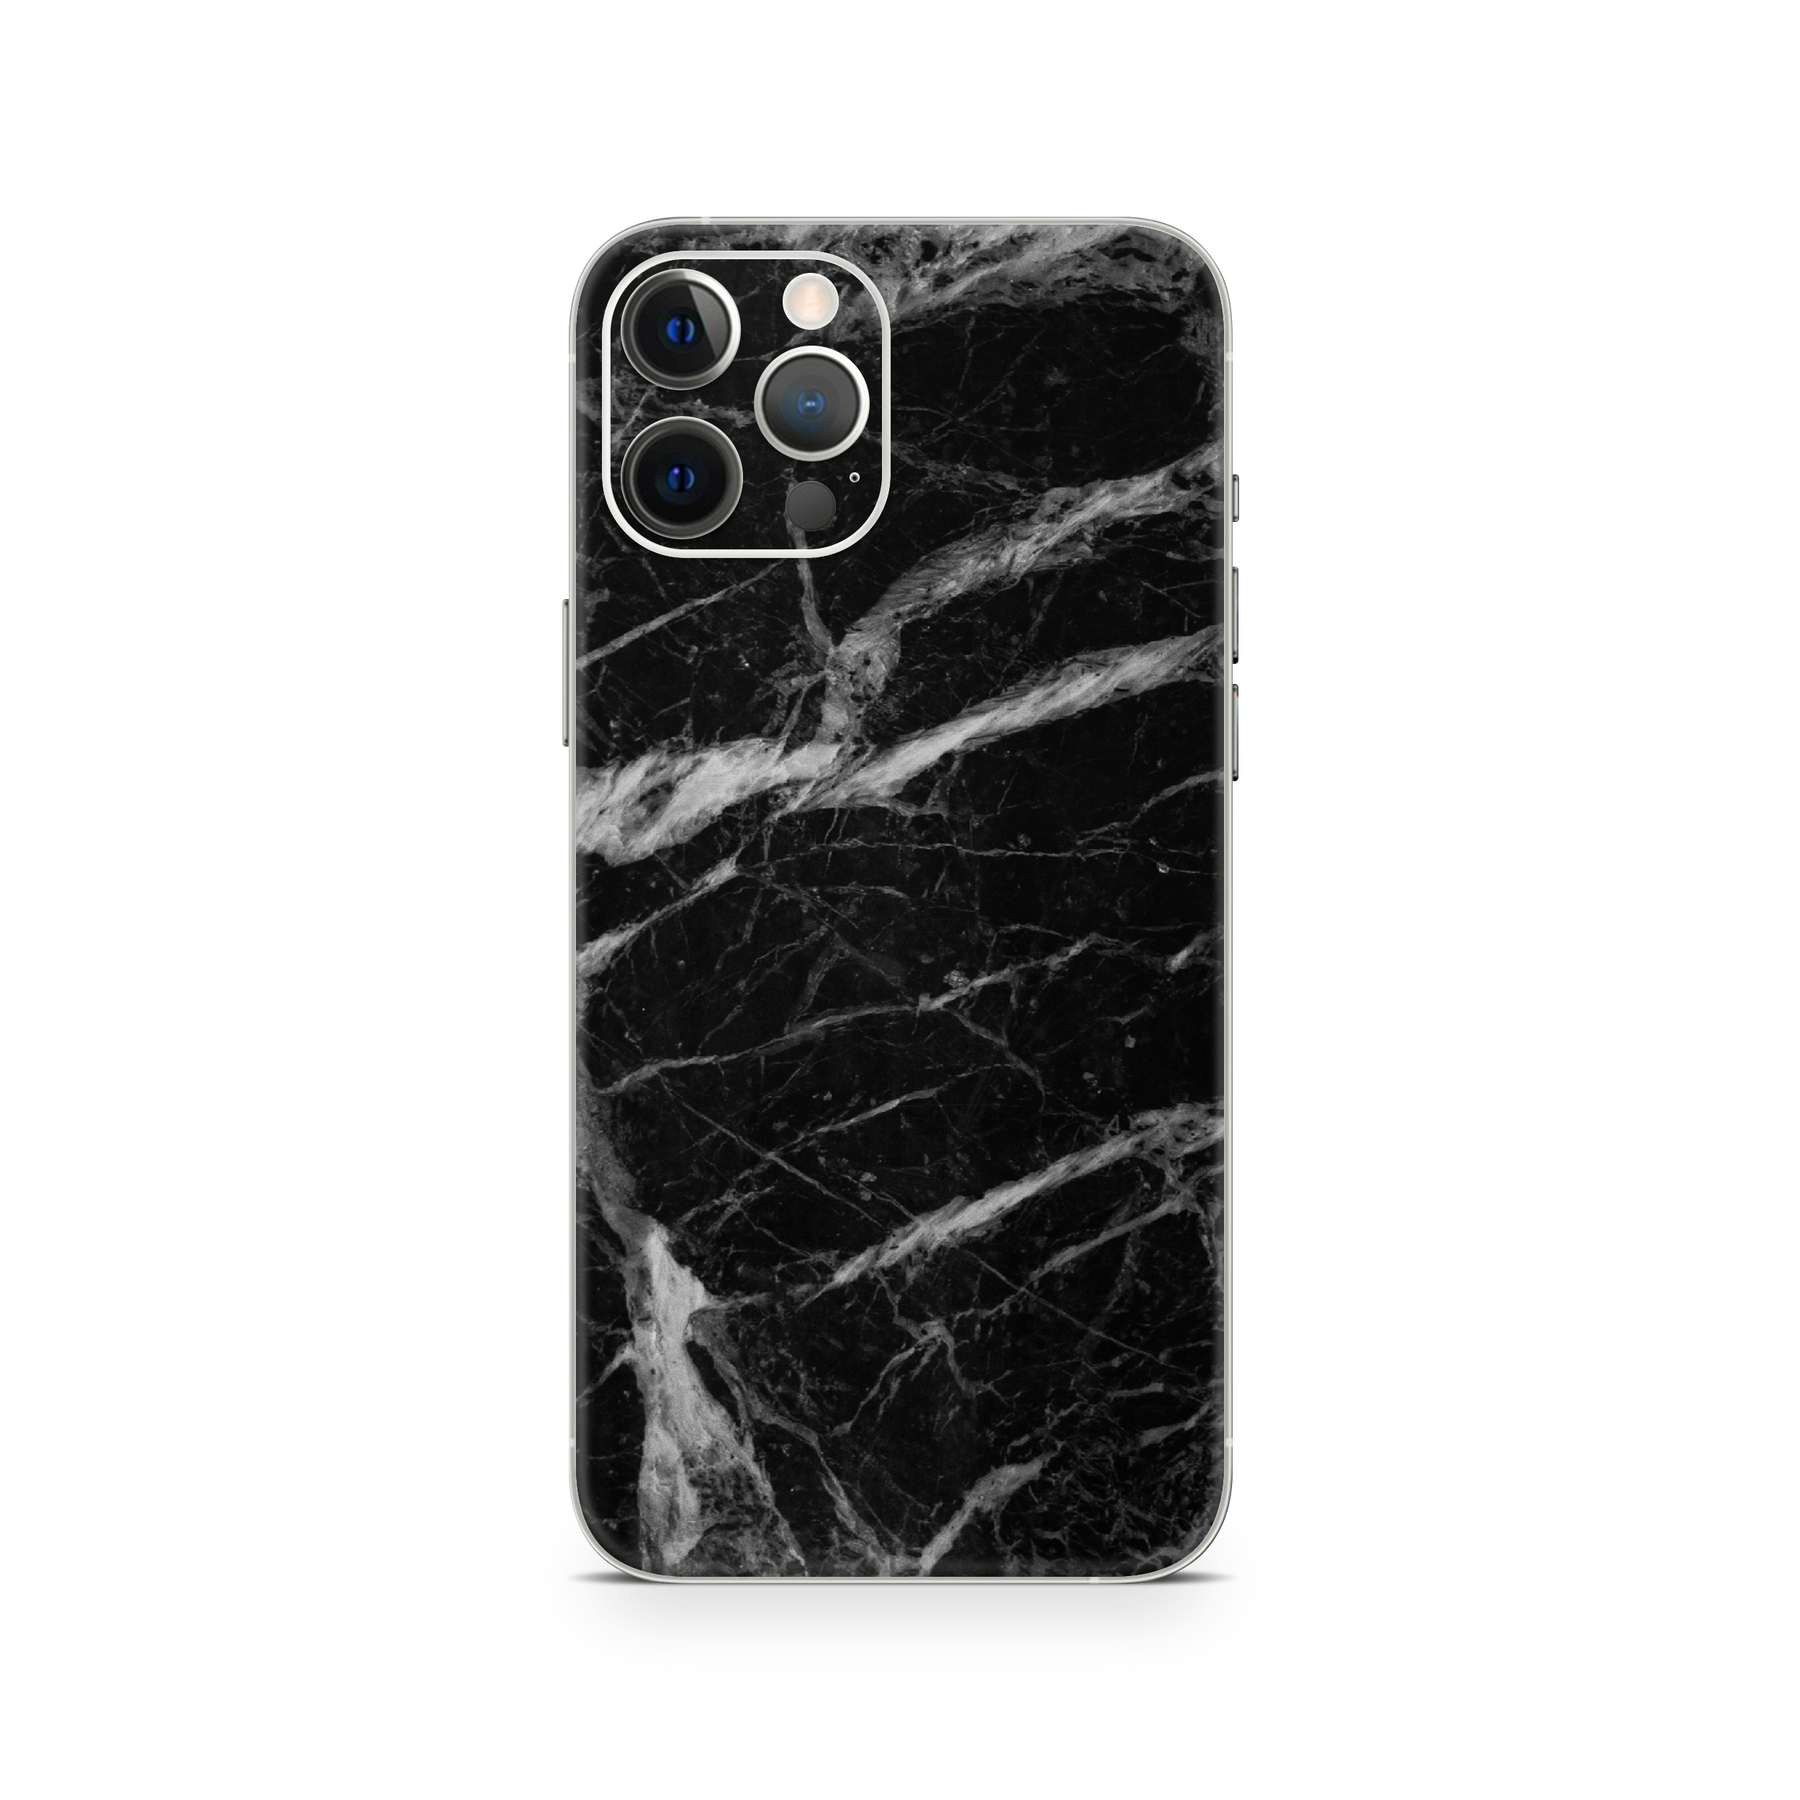 Apple iPhone 12 Pro max Black Marble Skin